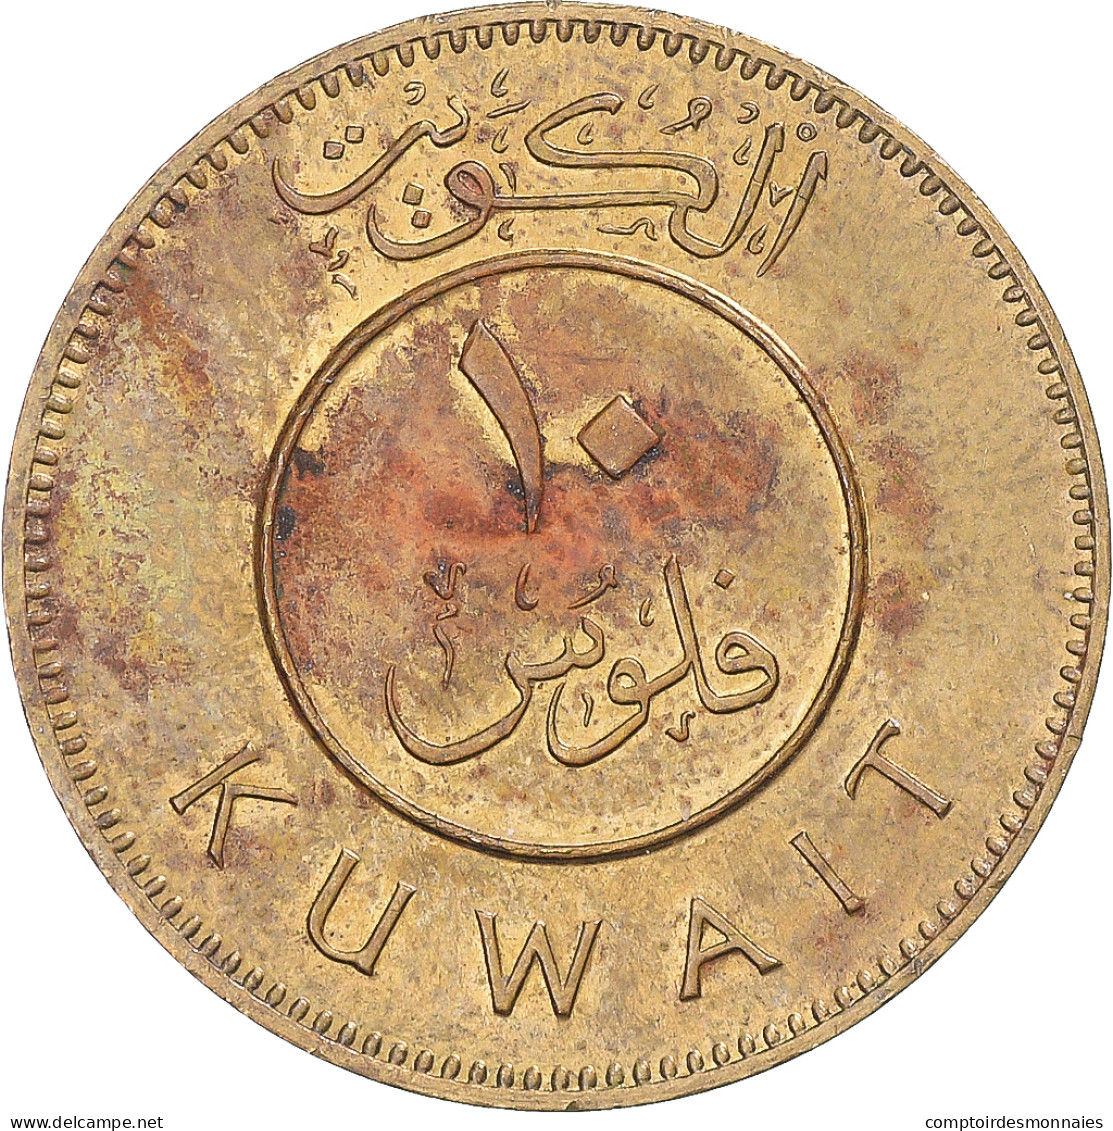 Monnaie, Koweït, 10 Fils, 1981 - Kuwait